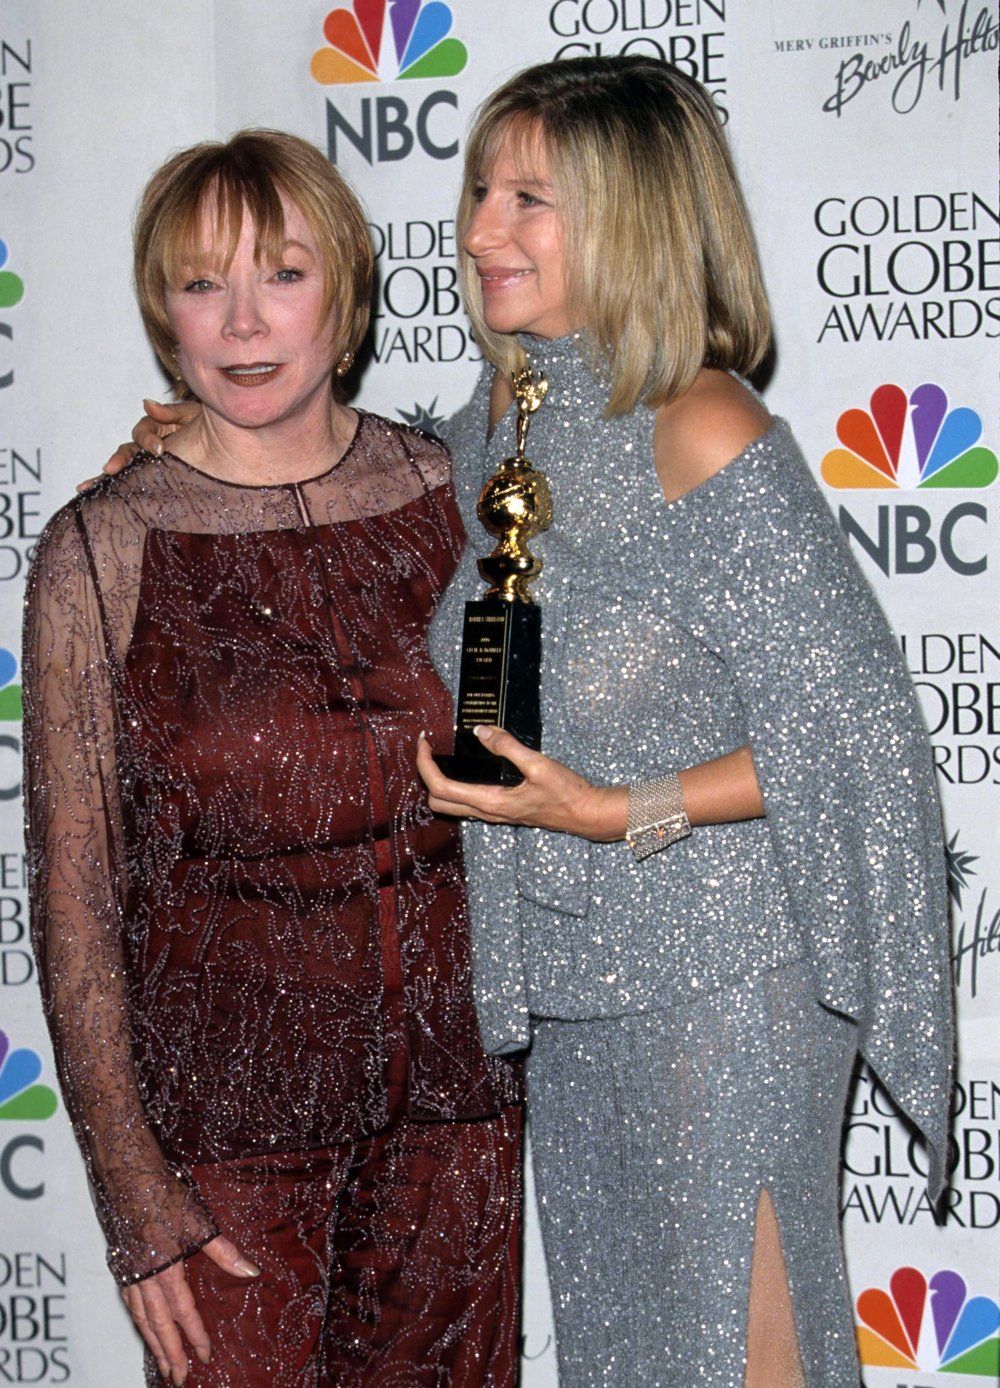 Shirley MacLaine and Barbra Streisand at the Golden Globe Awards, 2000.